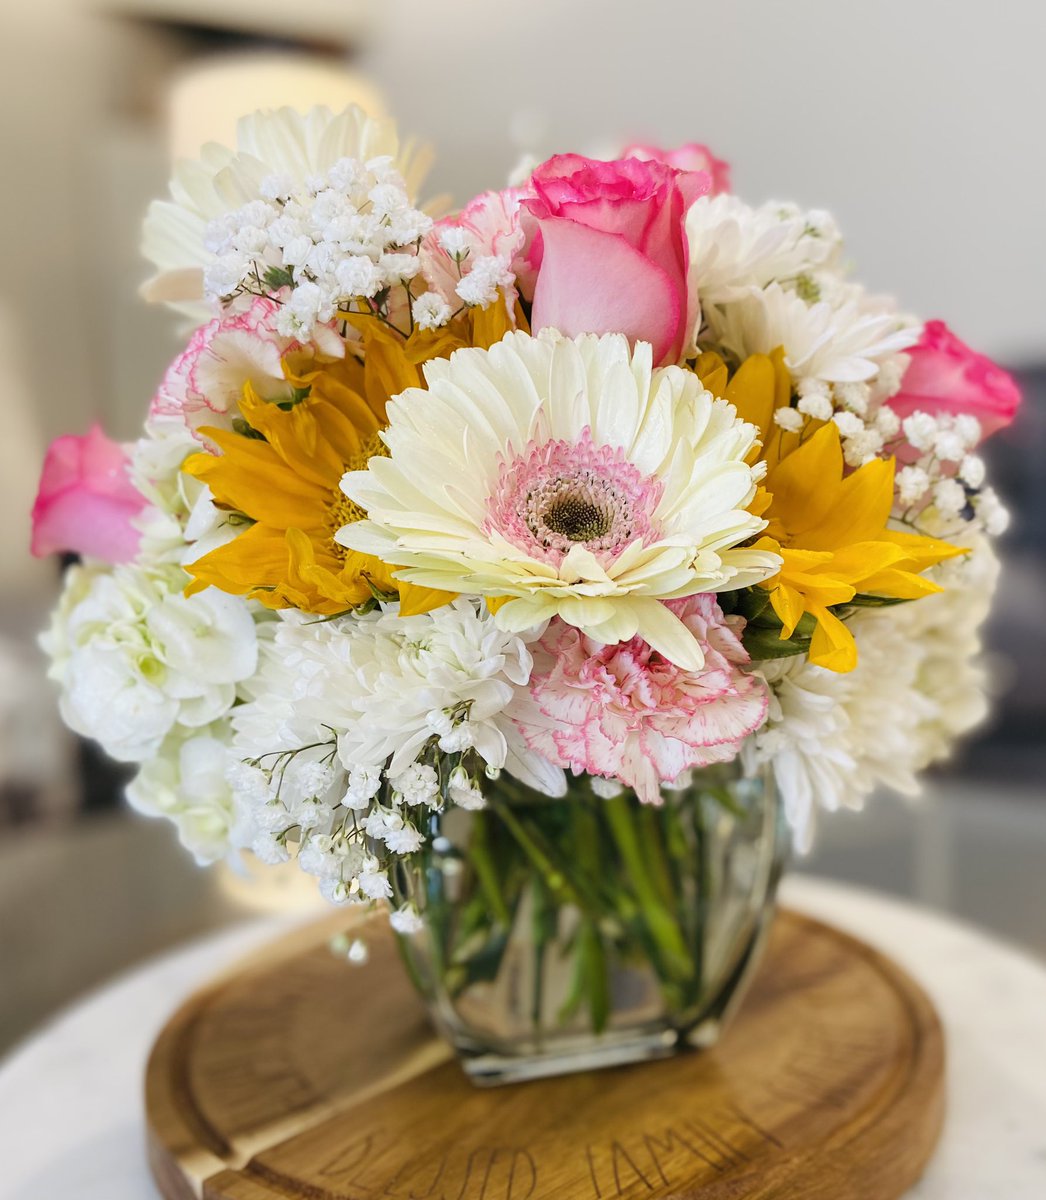 Bubble bowl flower arrangement #birthdayflowers #florist #designedforyou